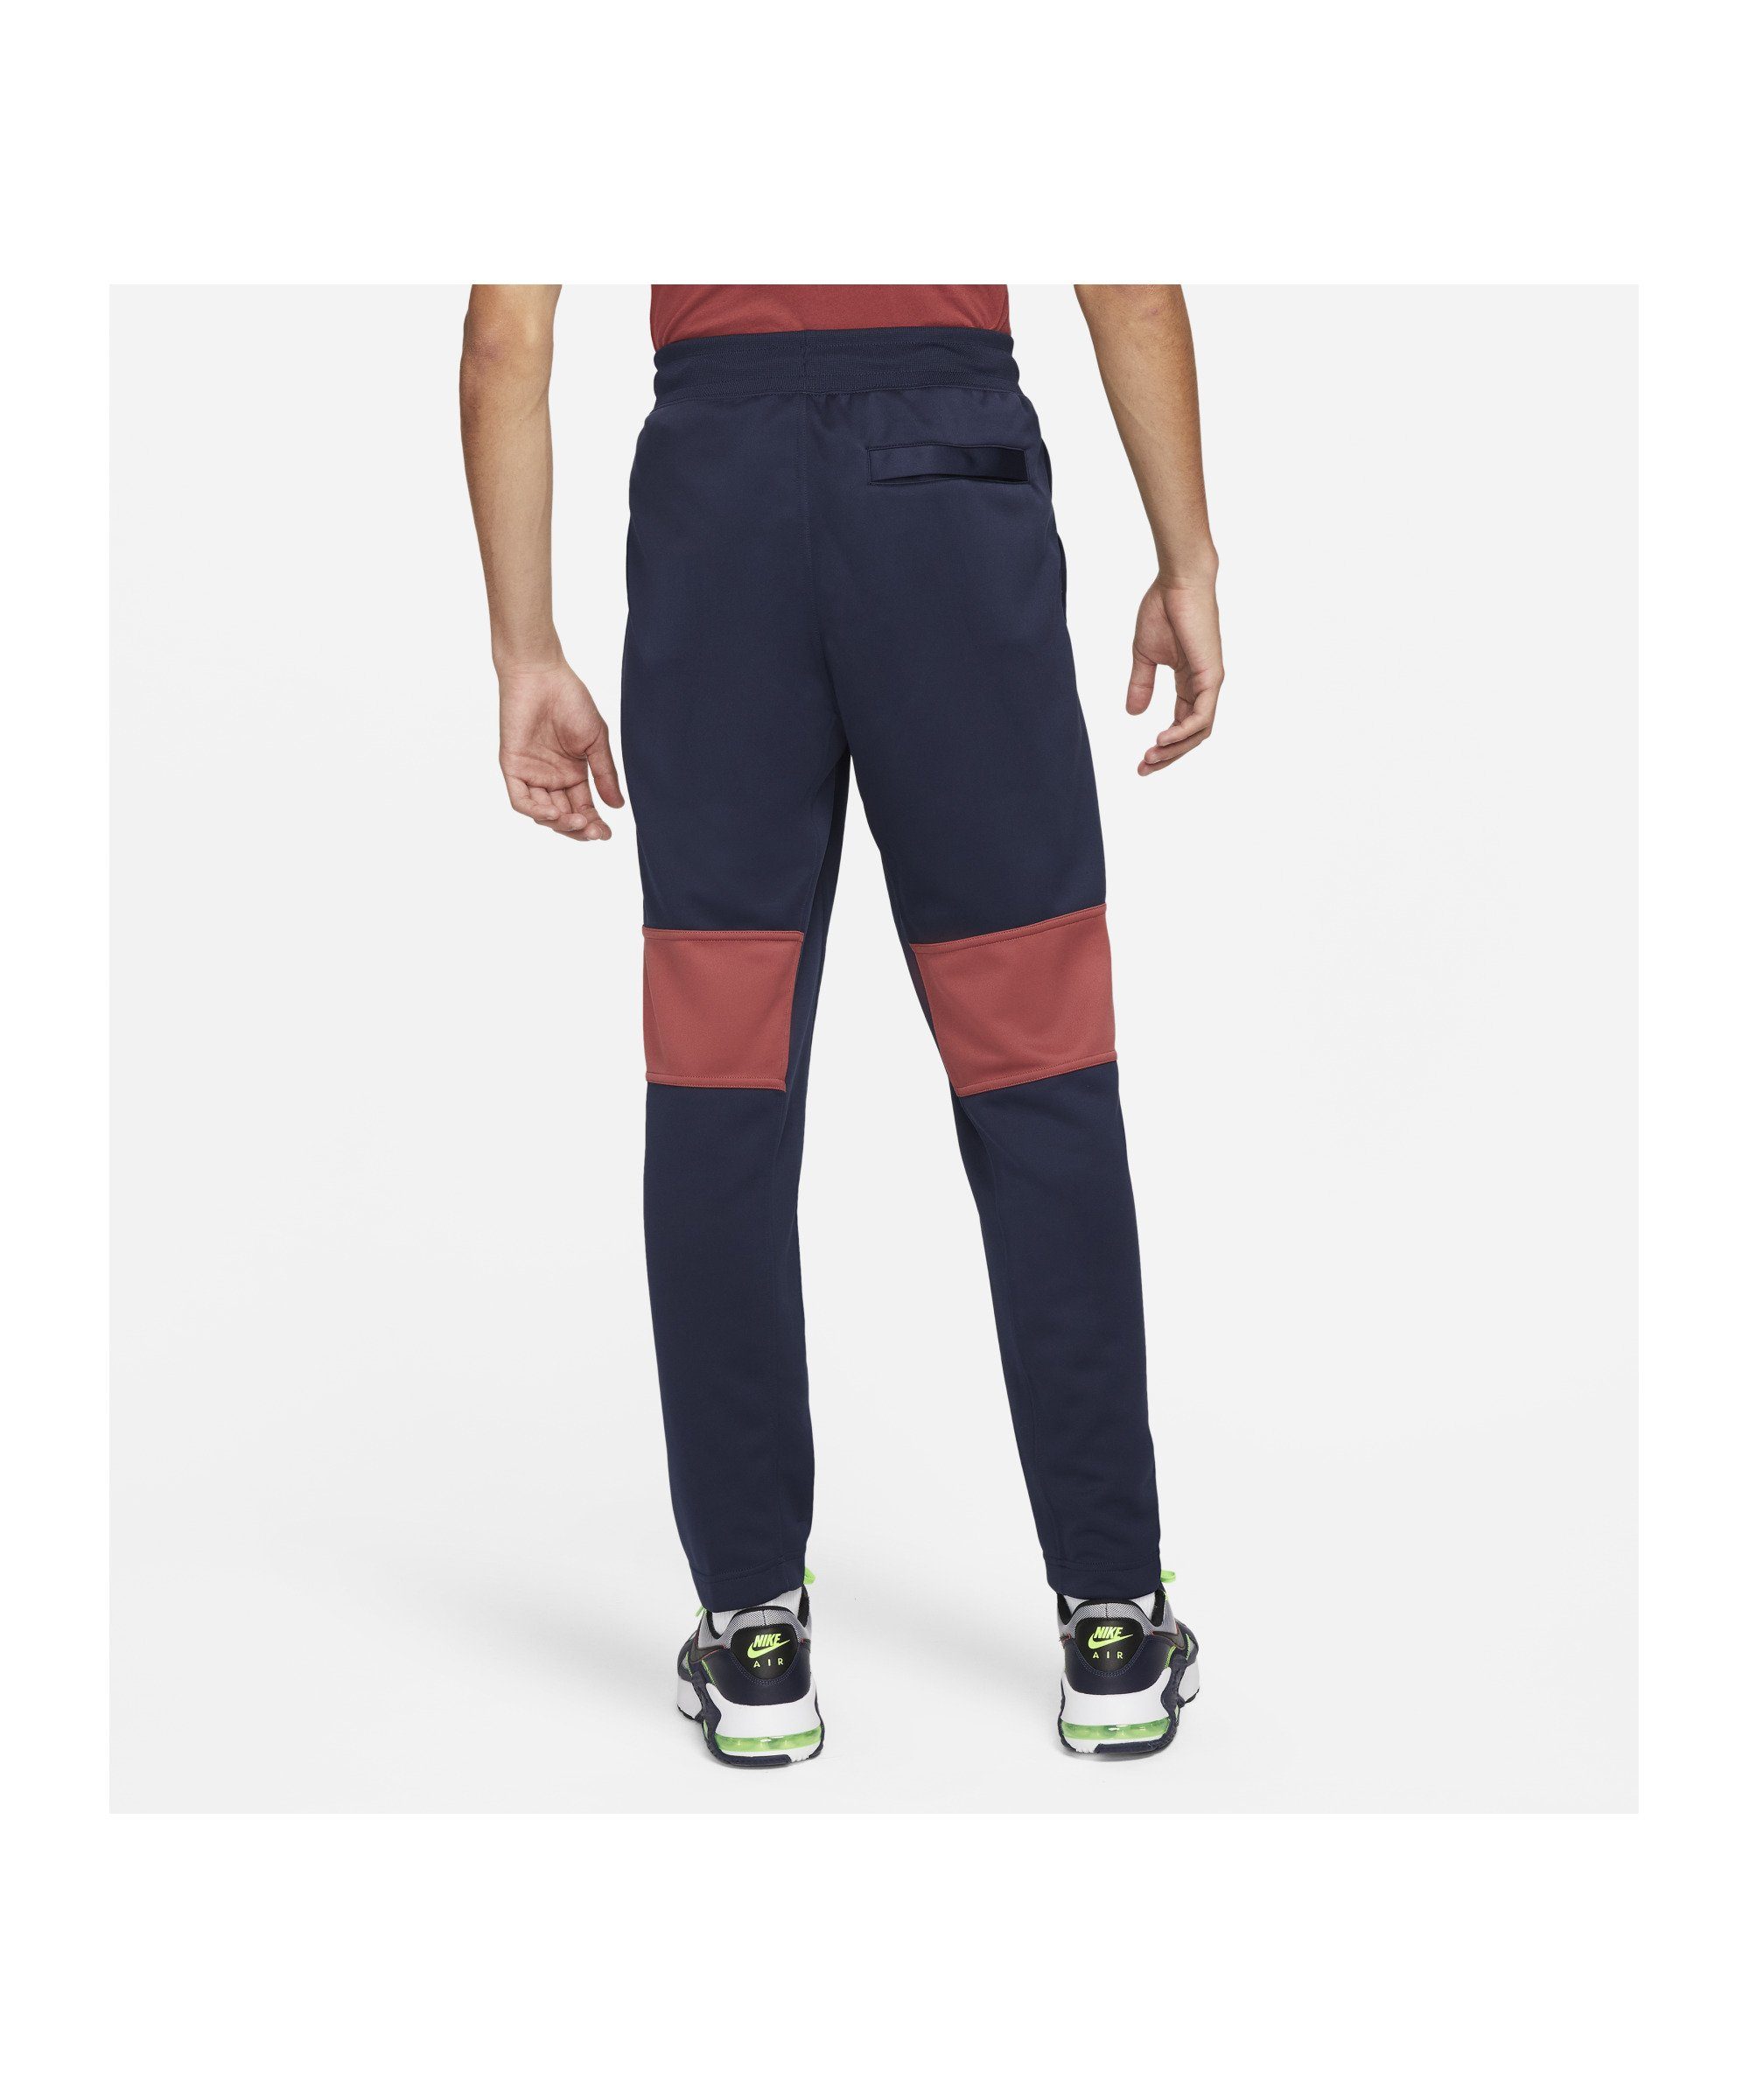 Nike Sportswear Jogginghose Air Jogginghose Poly-Knit